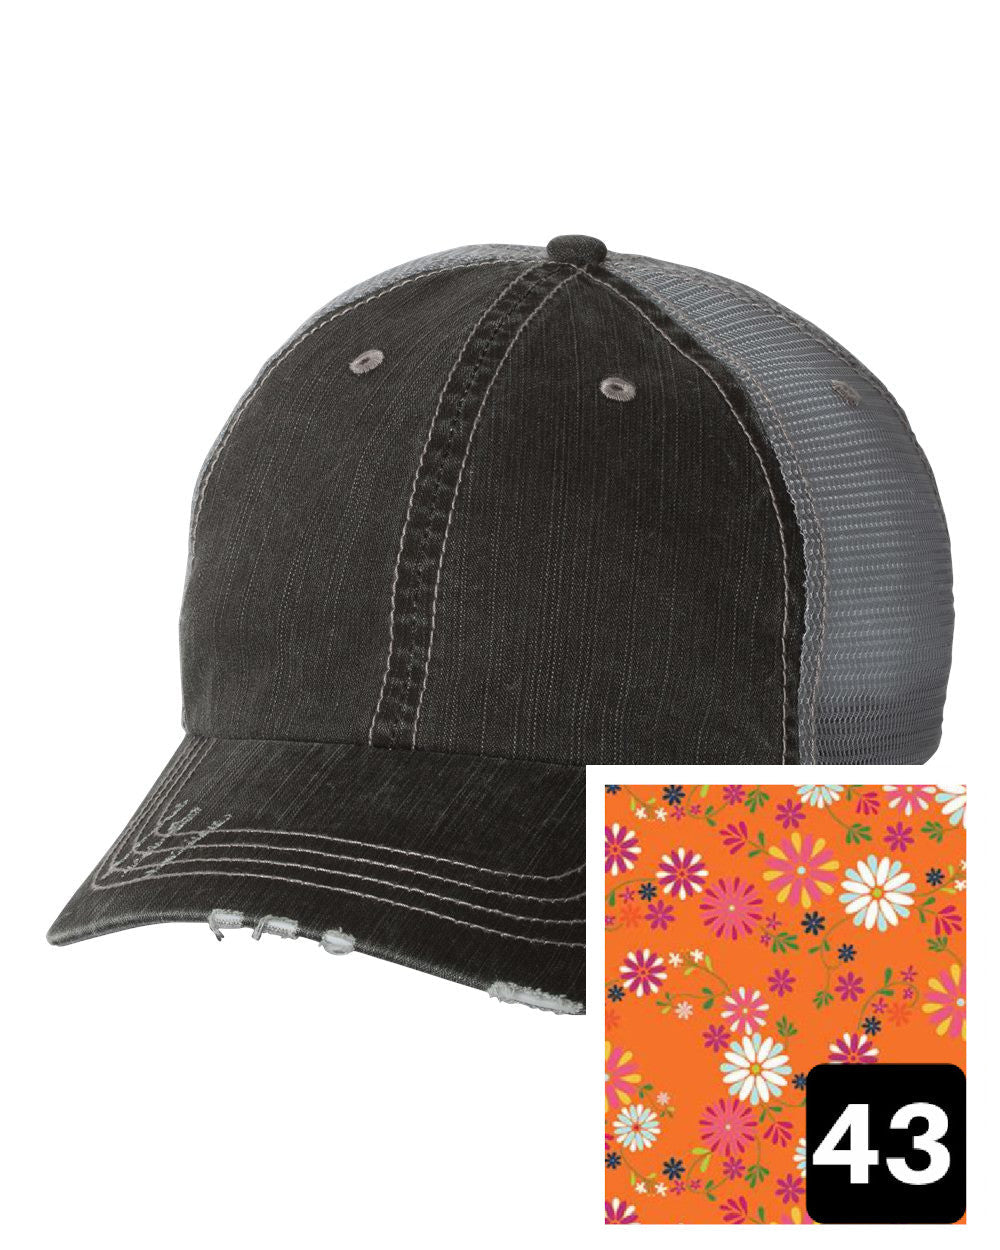 gray distressed trucker hat with black geometric fabric state of North Carolina